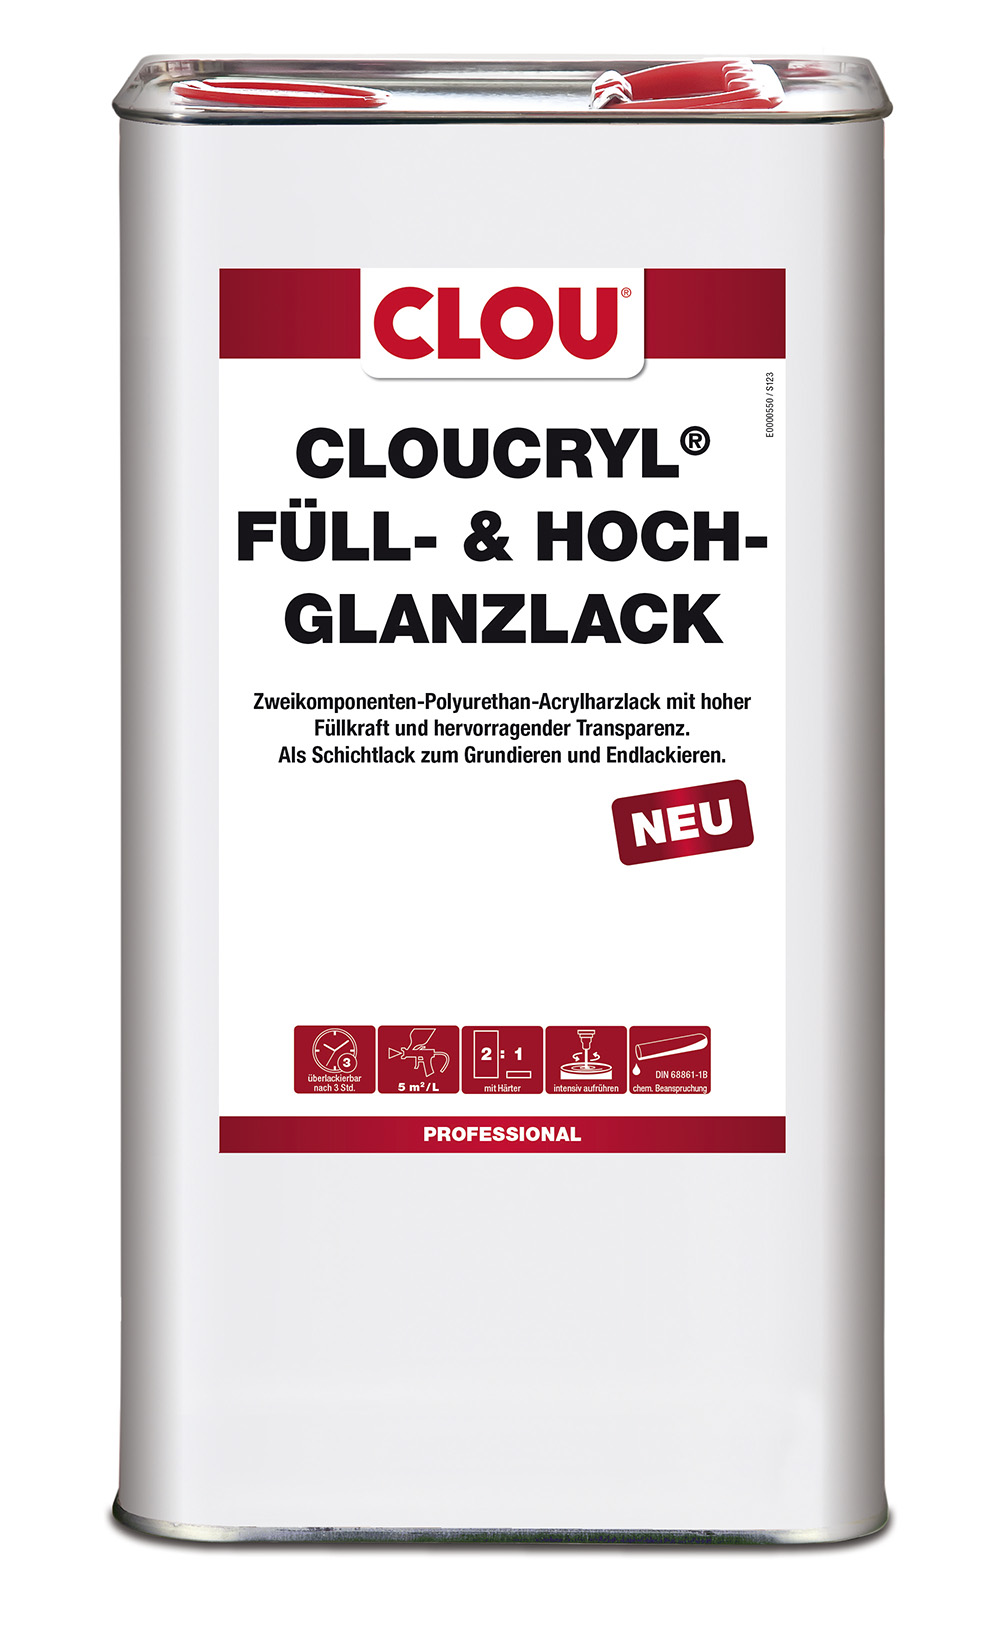 CLOUCRYL Füll- & Hochglanzlack